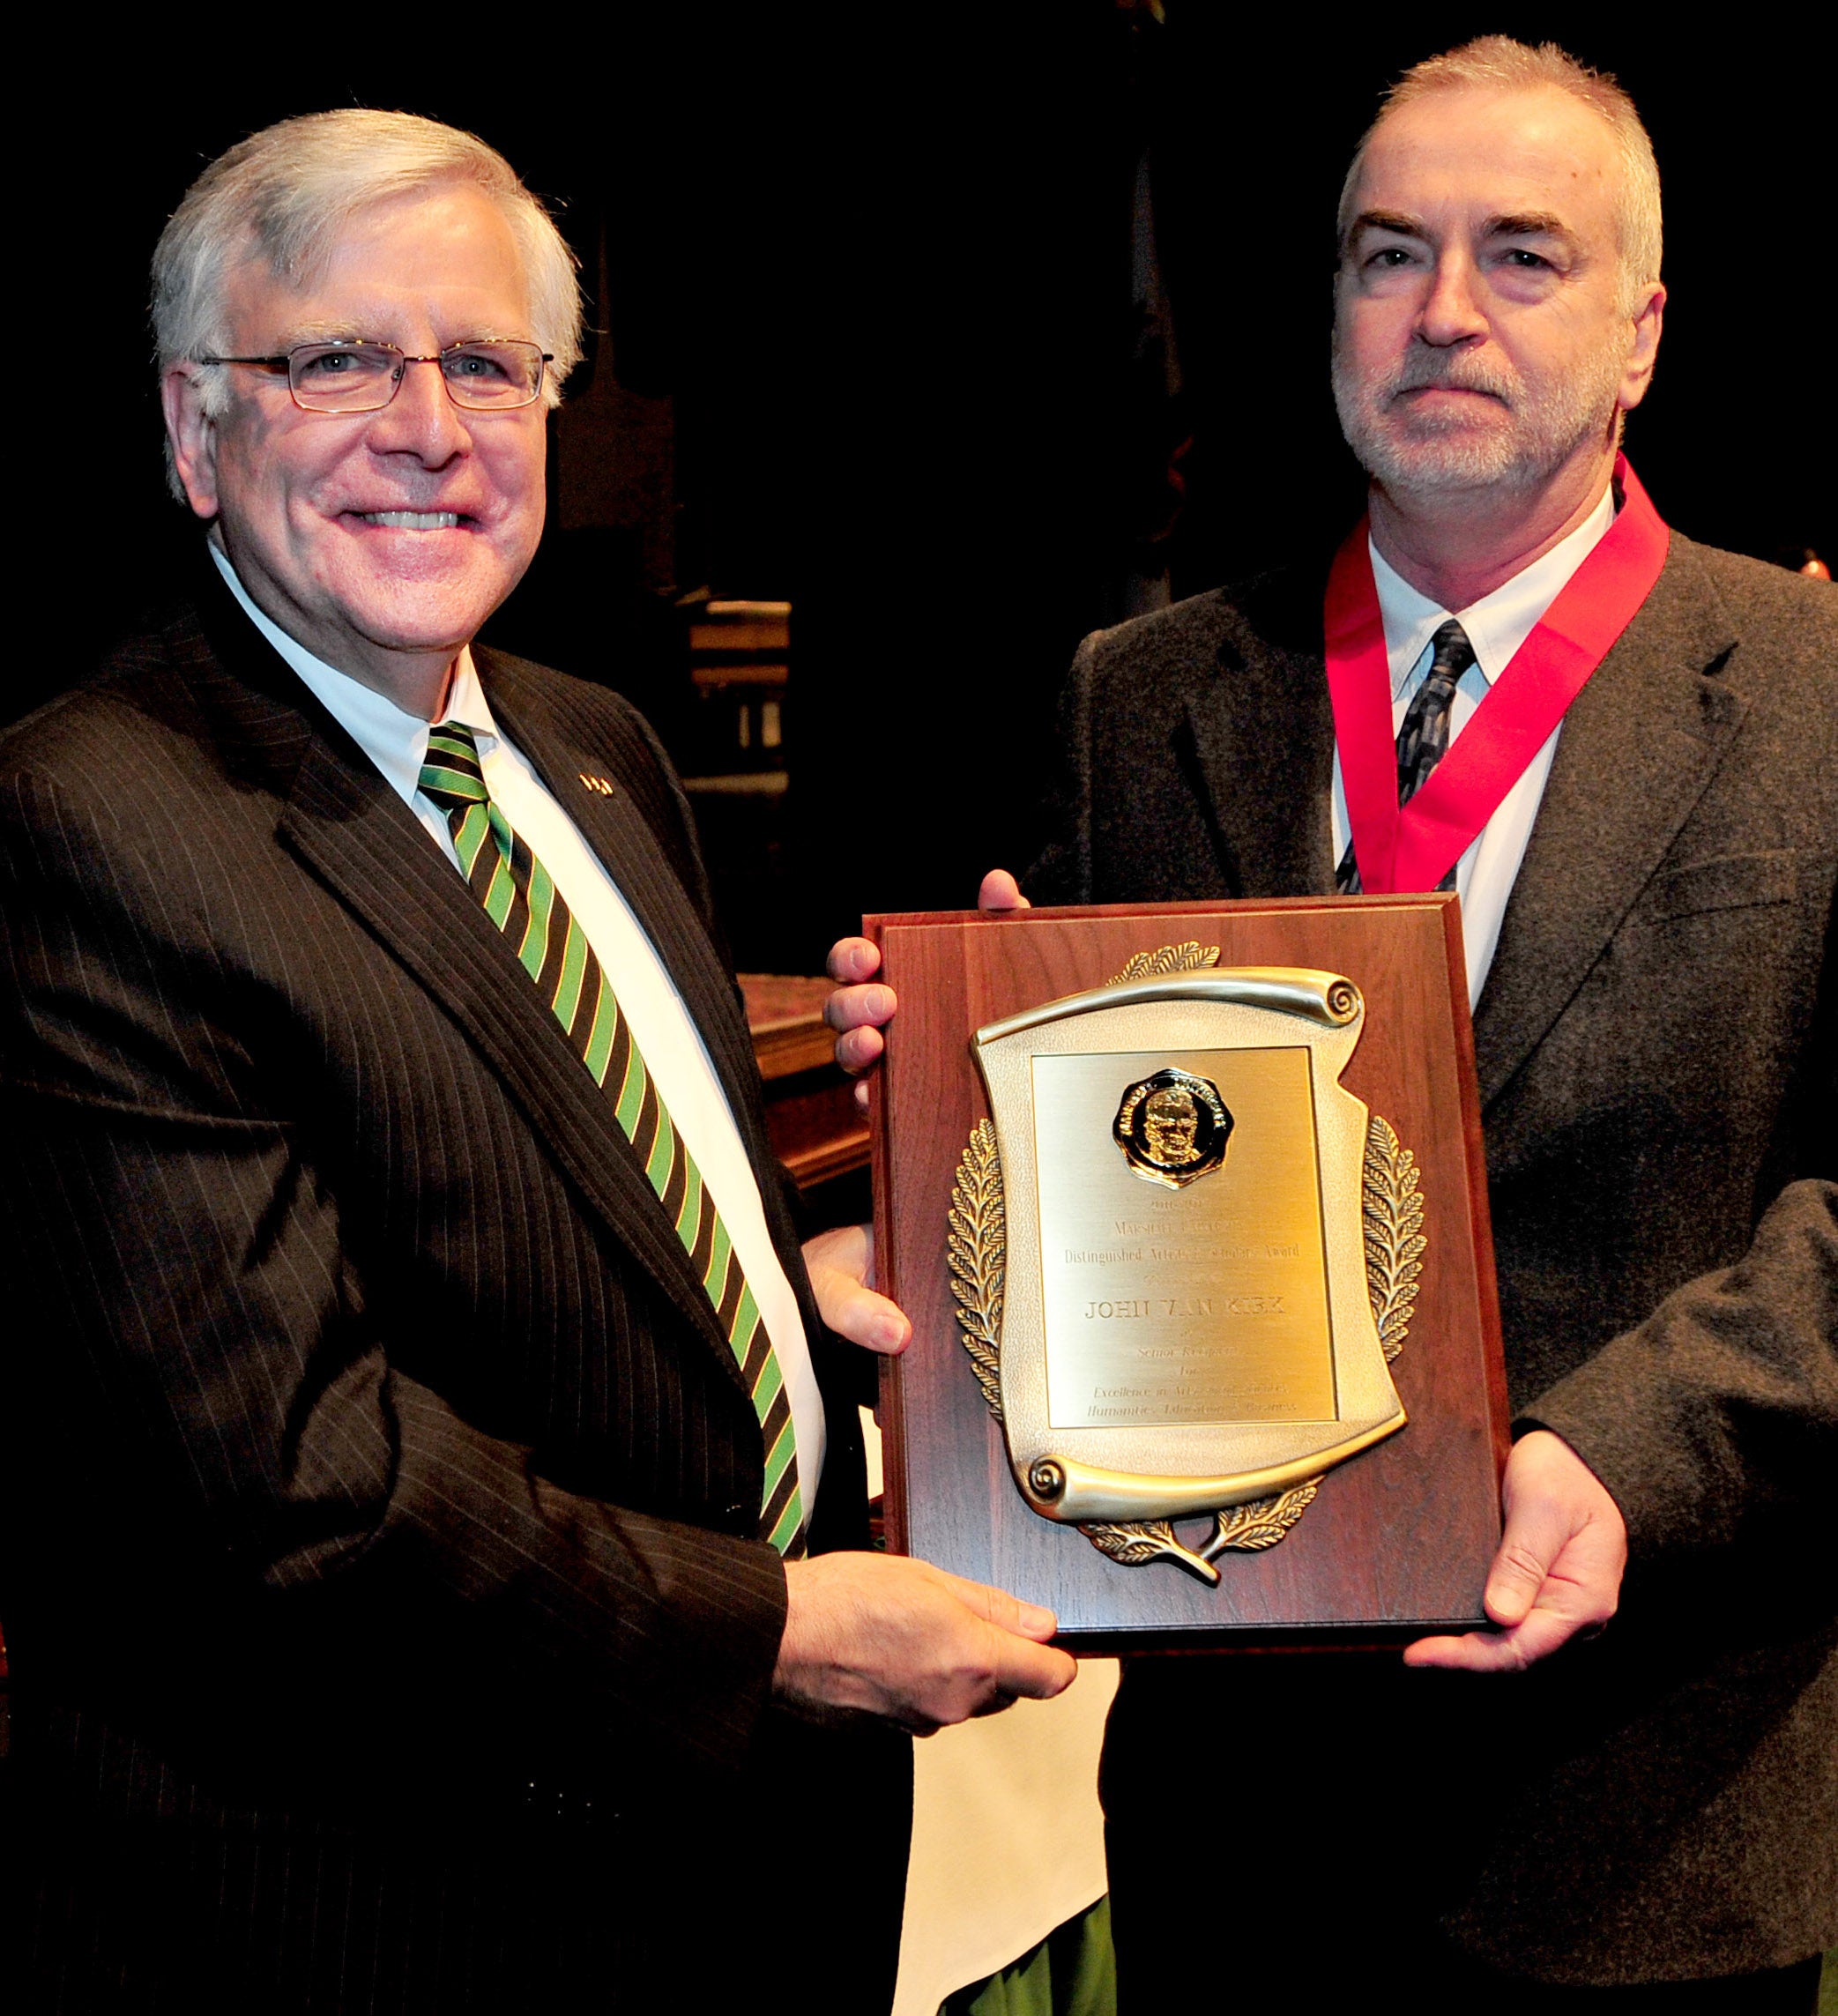 Professor Van Kirk Recognized as Distinguished Senior Scholar - College